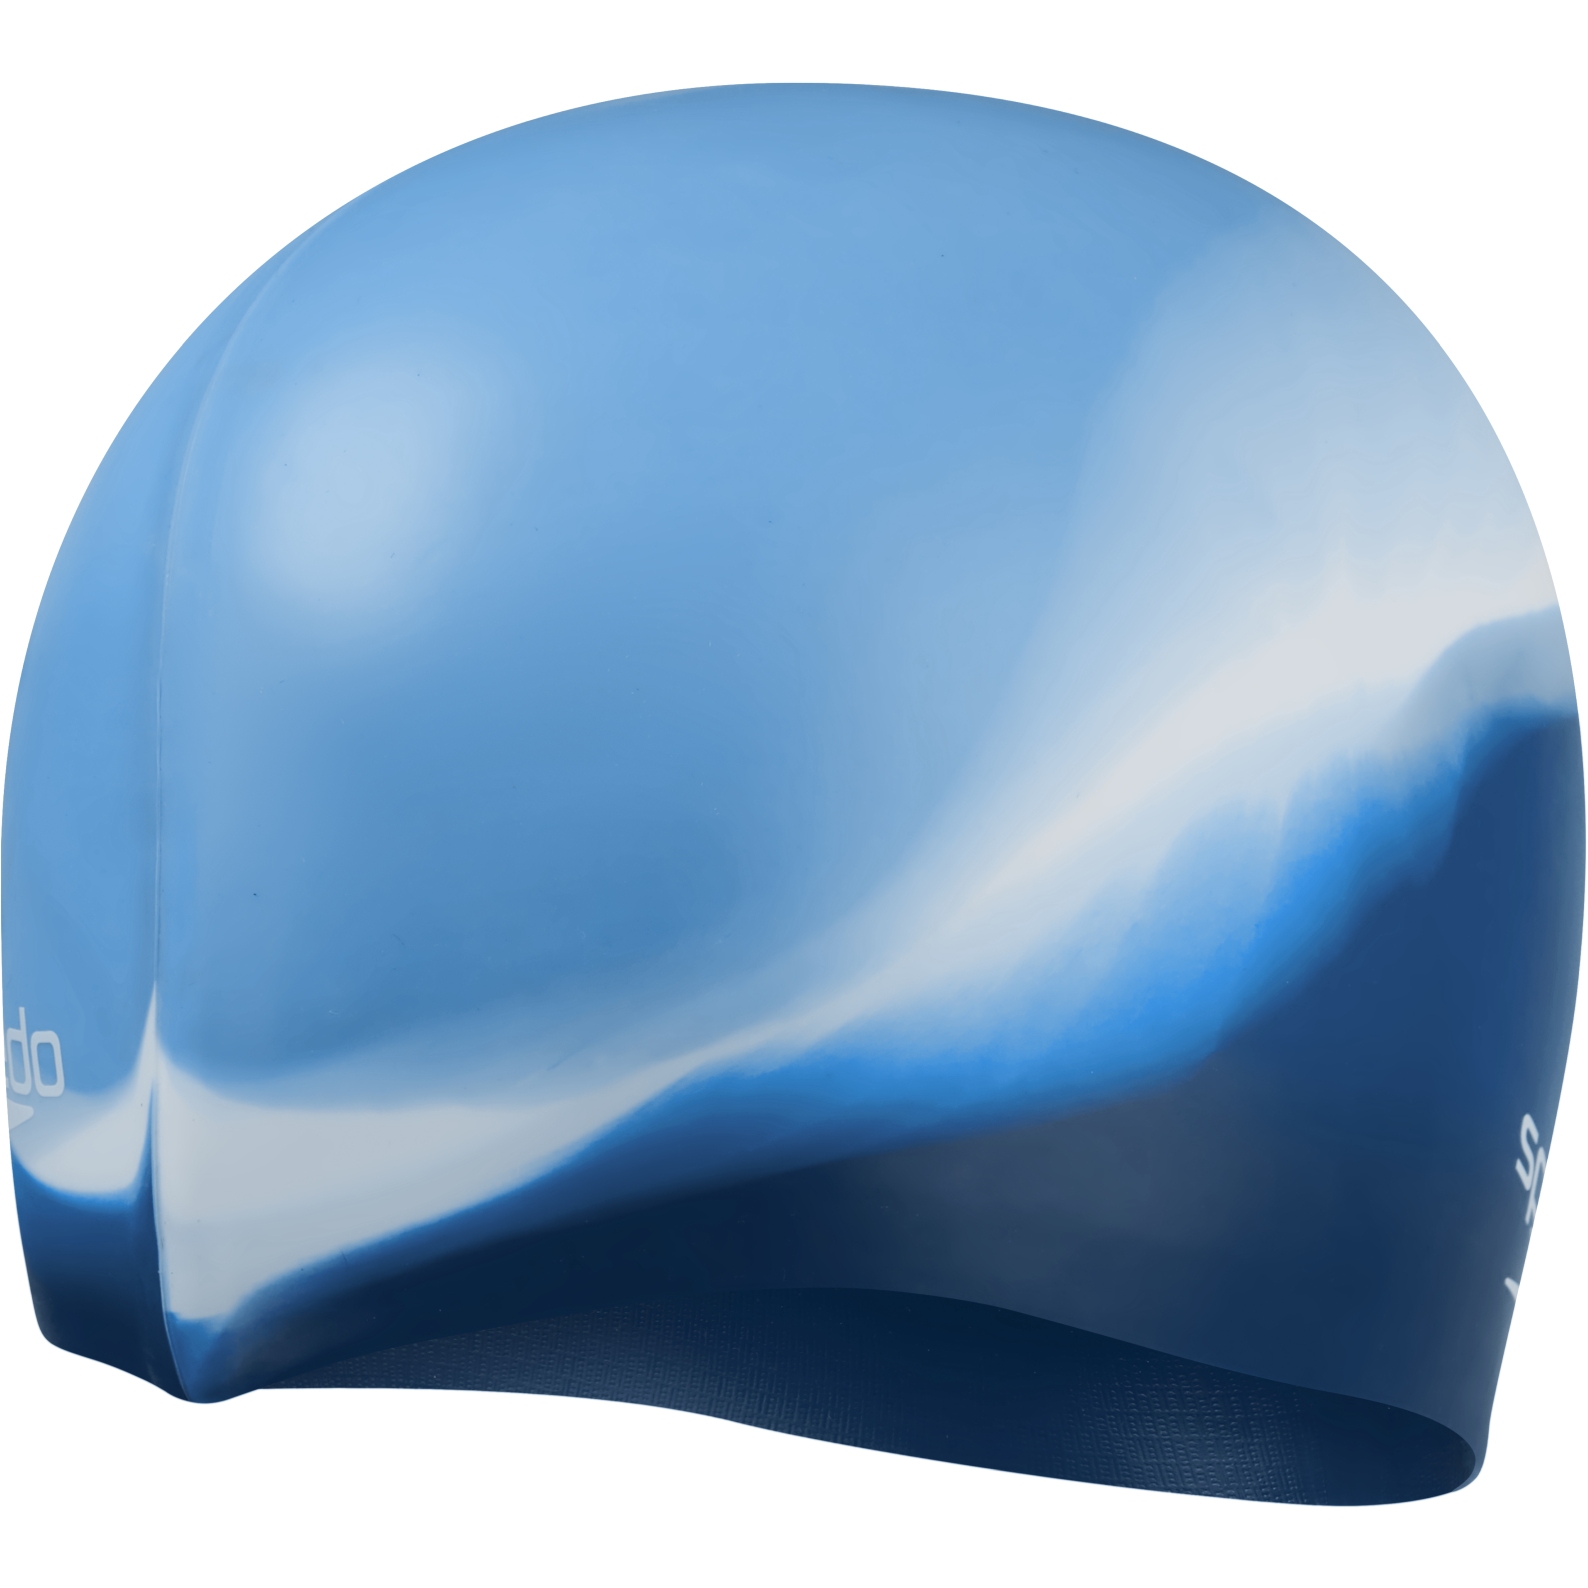 Productfoto van Speedo Multi Colour Badmuts - blissful blue/aegean blue/white